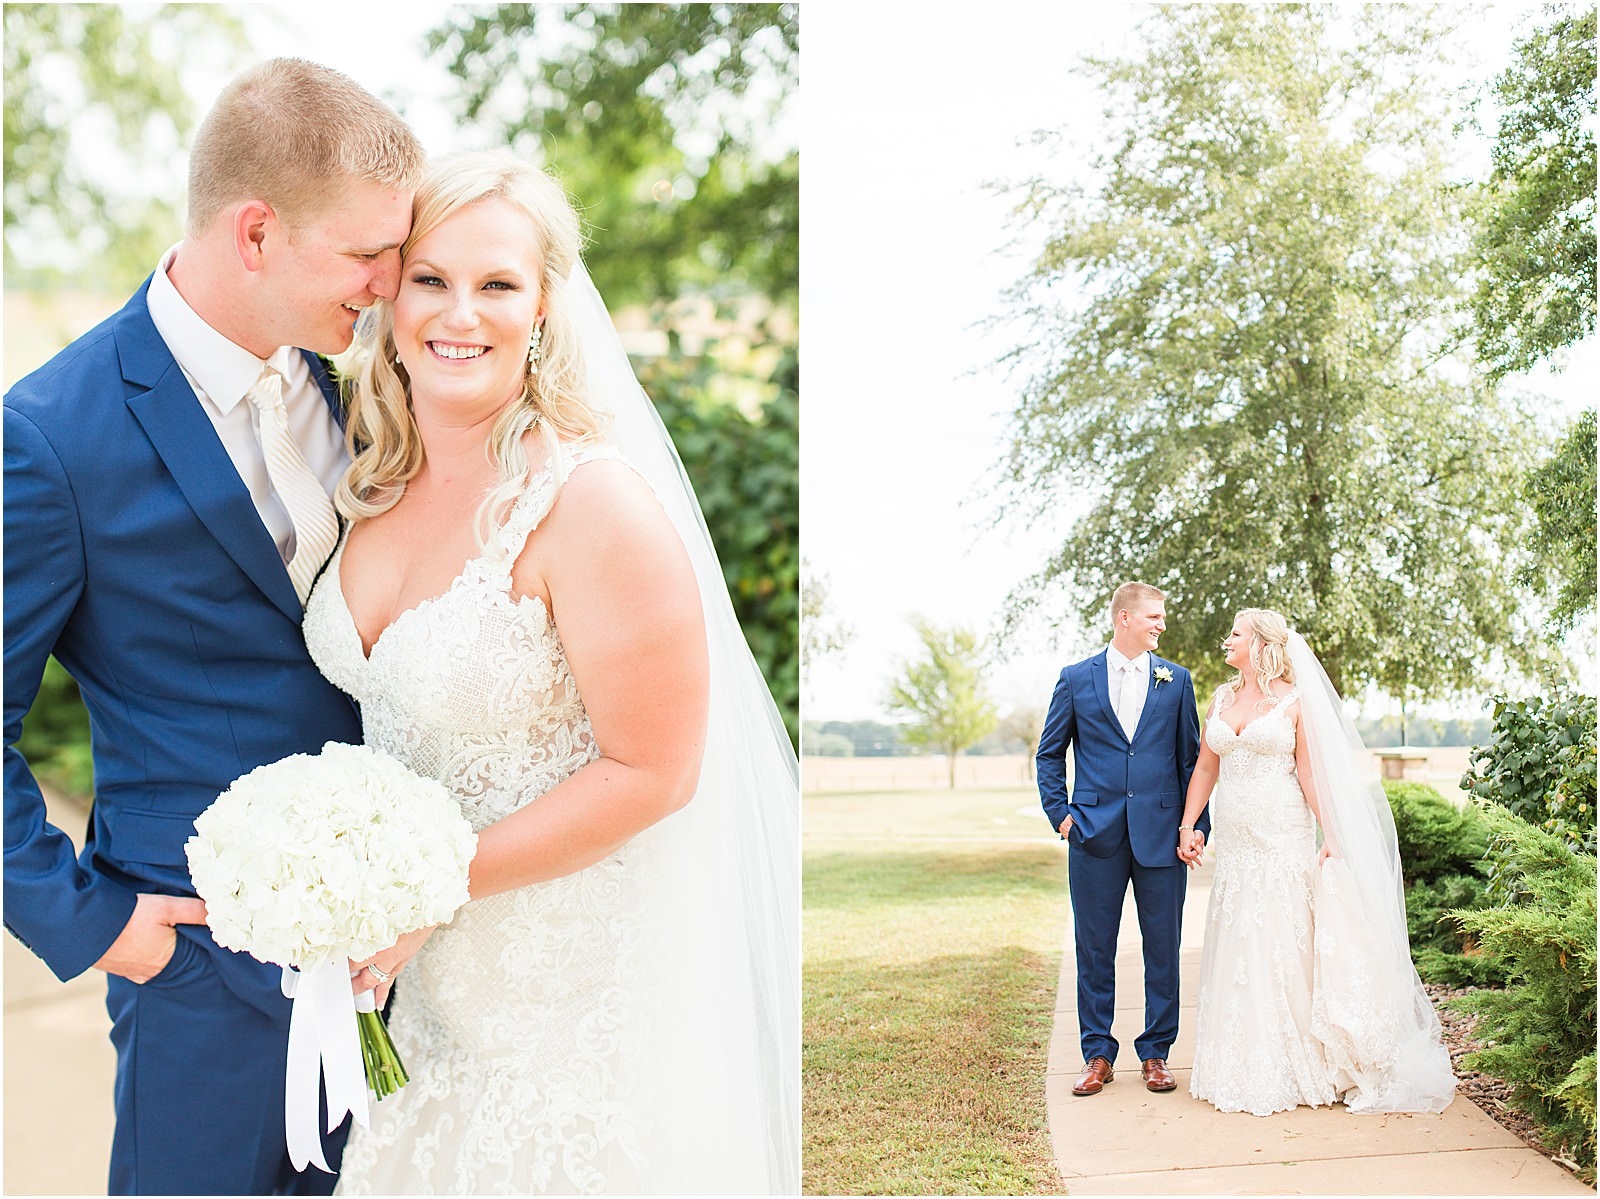 Kelsey and Caleb | Walkers Bluff Winery Wedding | Bret and Brandie Photography048.jpg